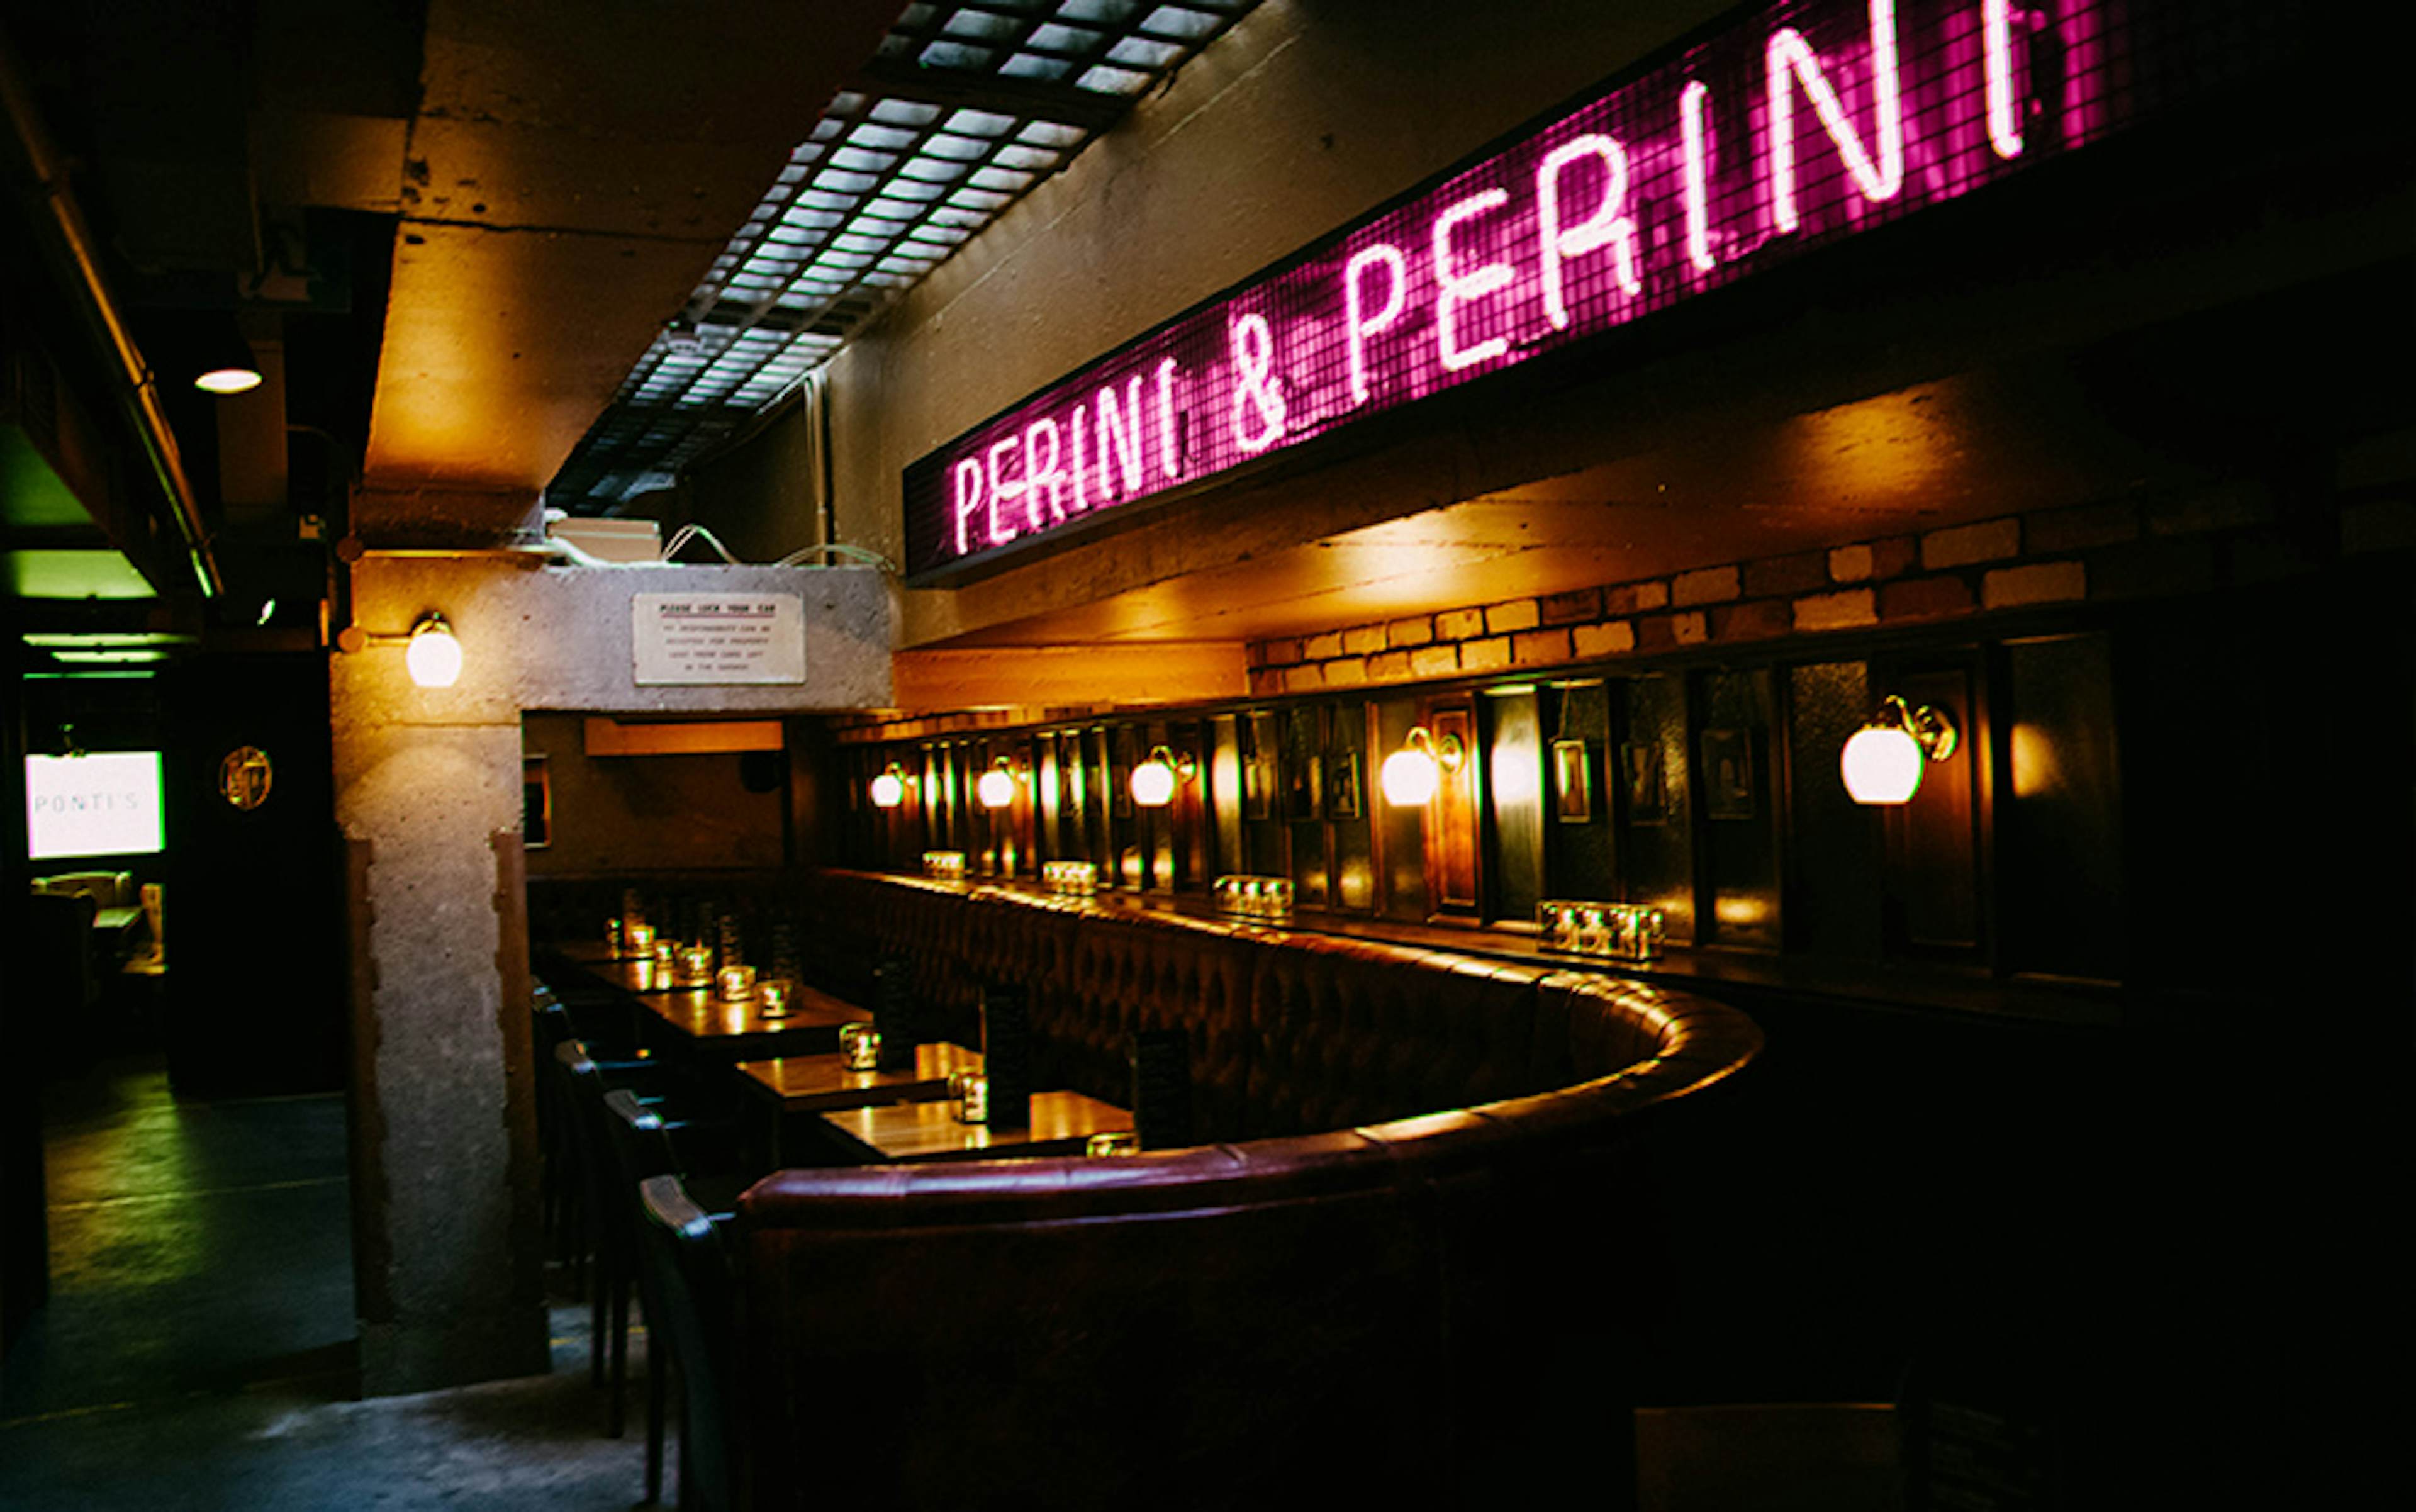 Perini & Perini  - Bar image 1